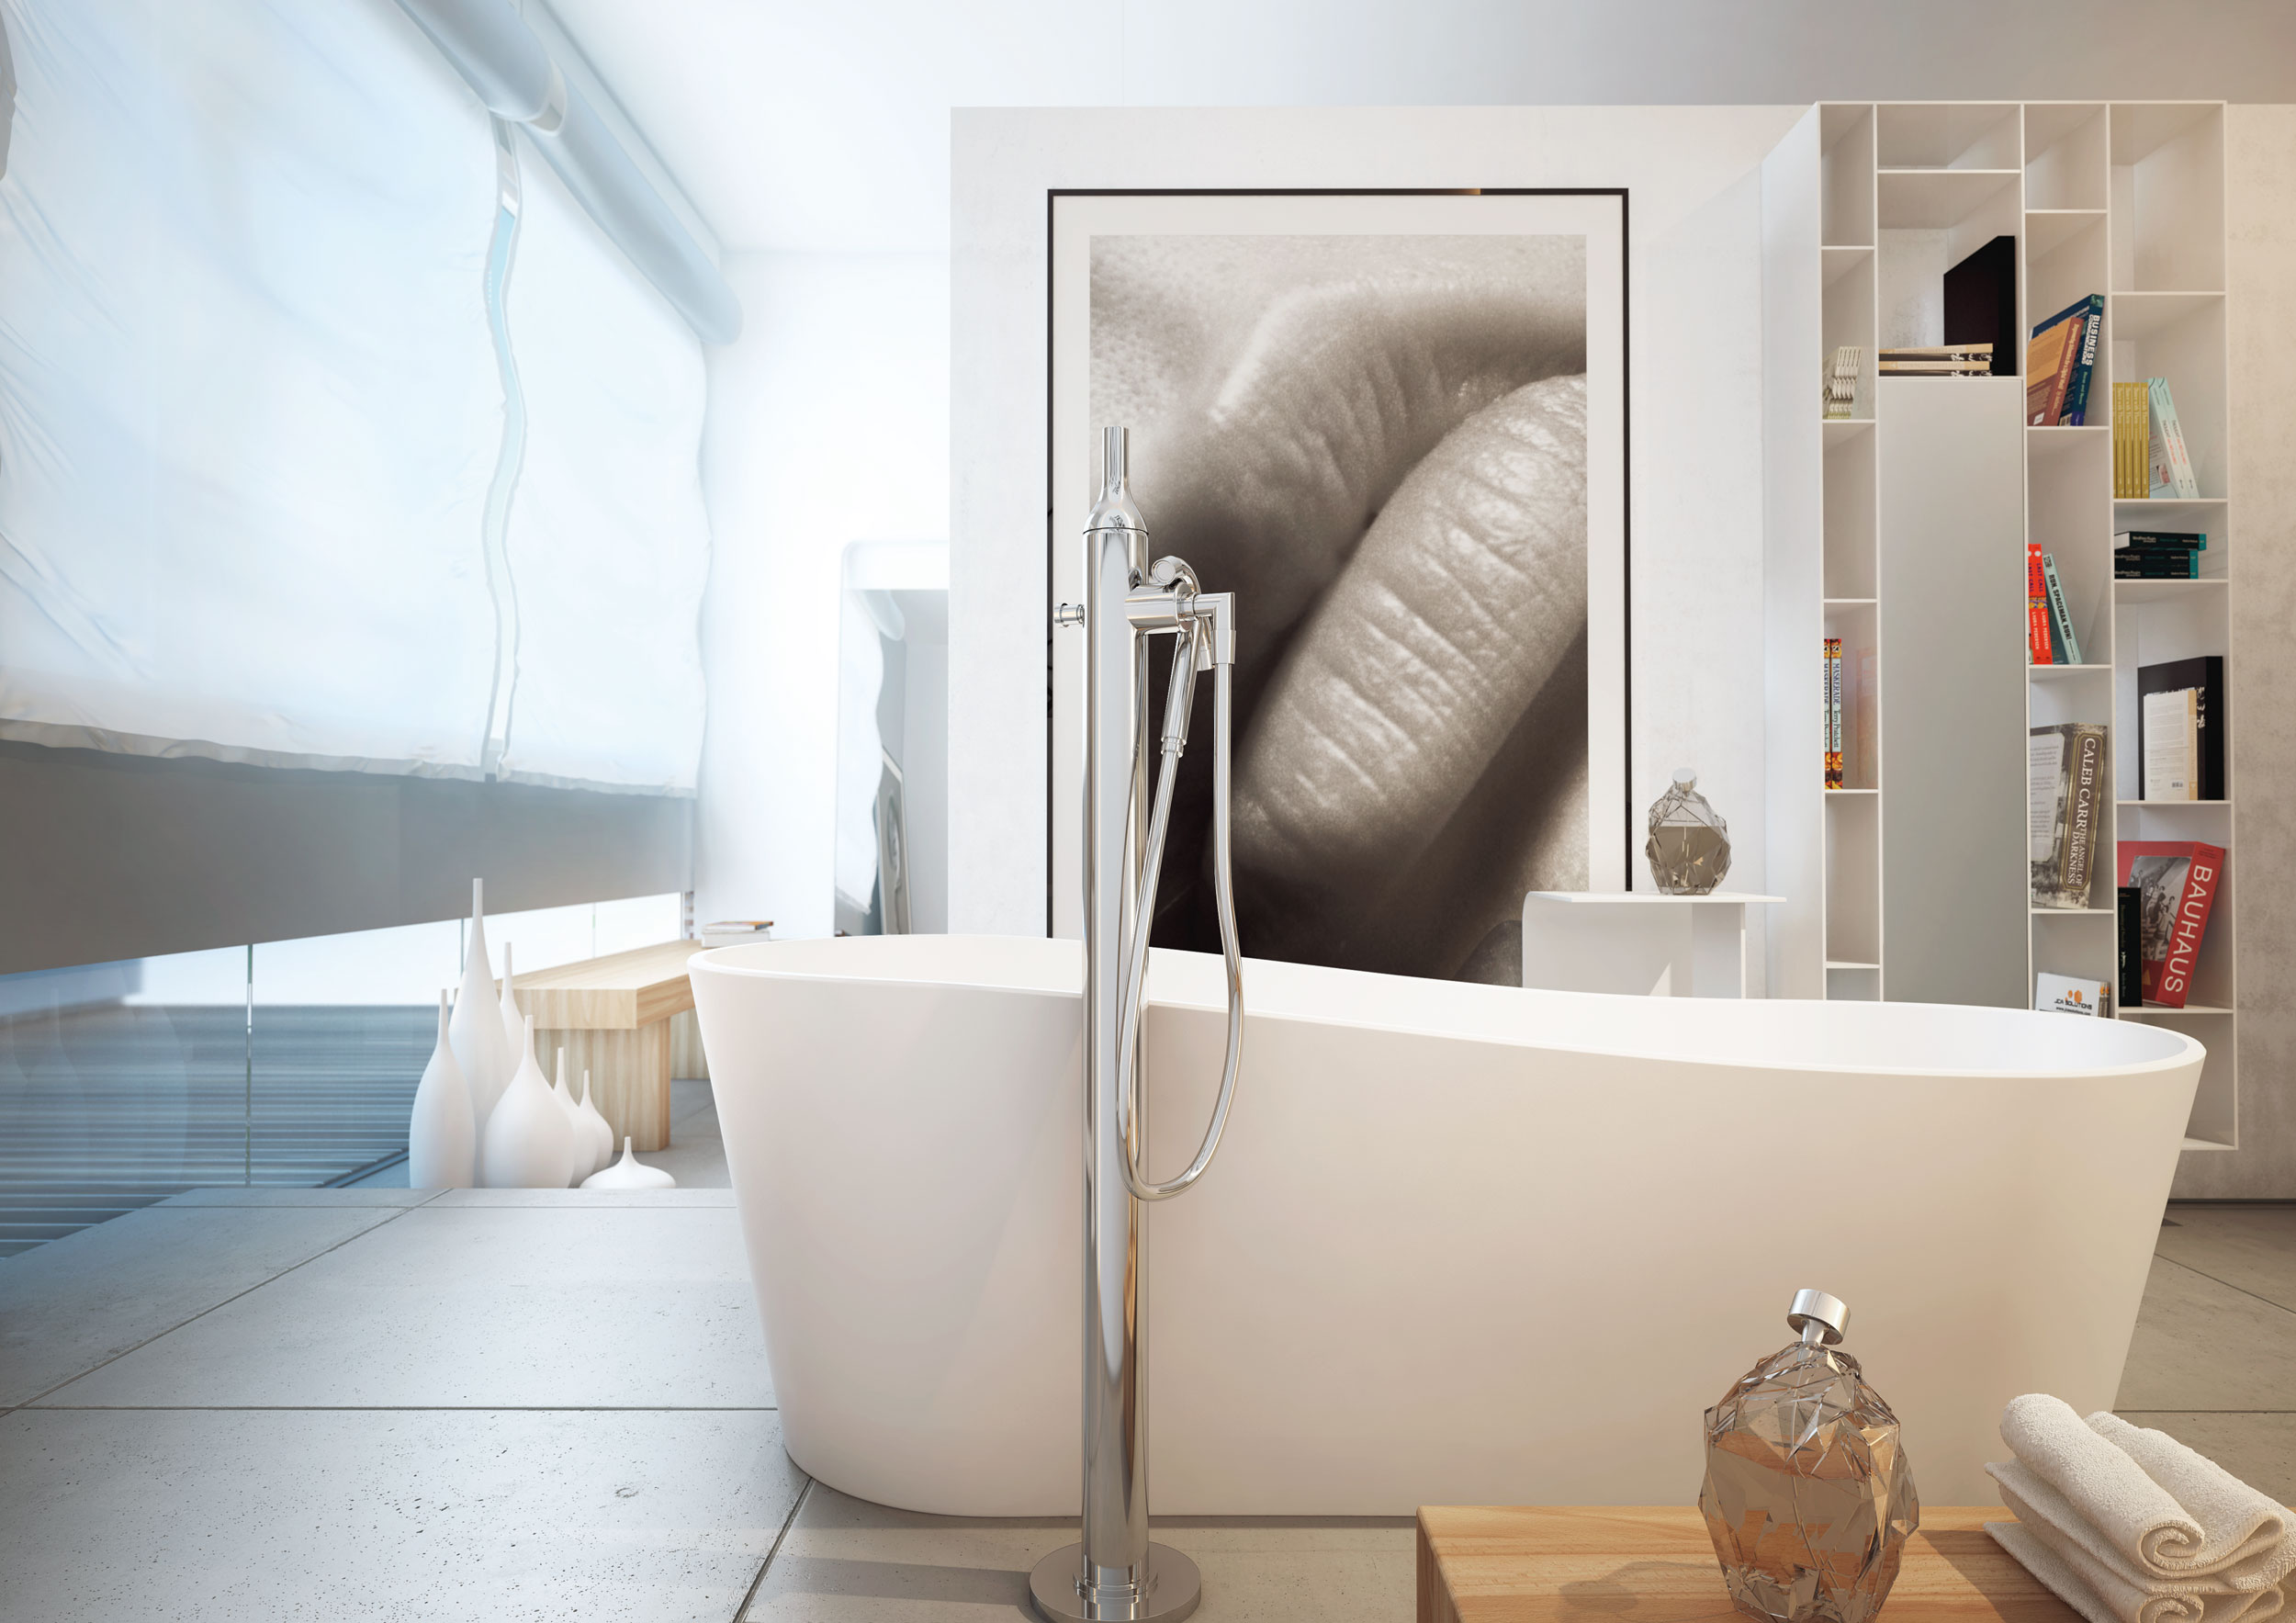 Bathrooms-Lovely-Bookshelf-and-elegant-Free-Standing-Bathtub-for-beautiful-White-Italian-Style-Bathroom-Design-with-Standing-Bathtub-Faucet